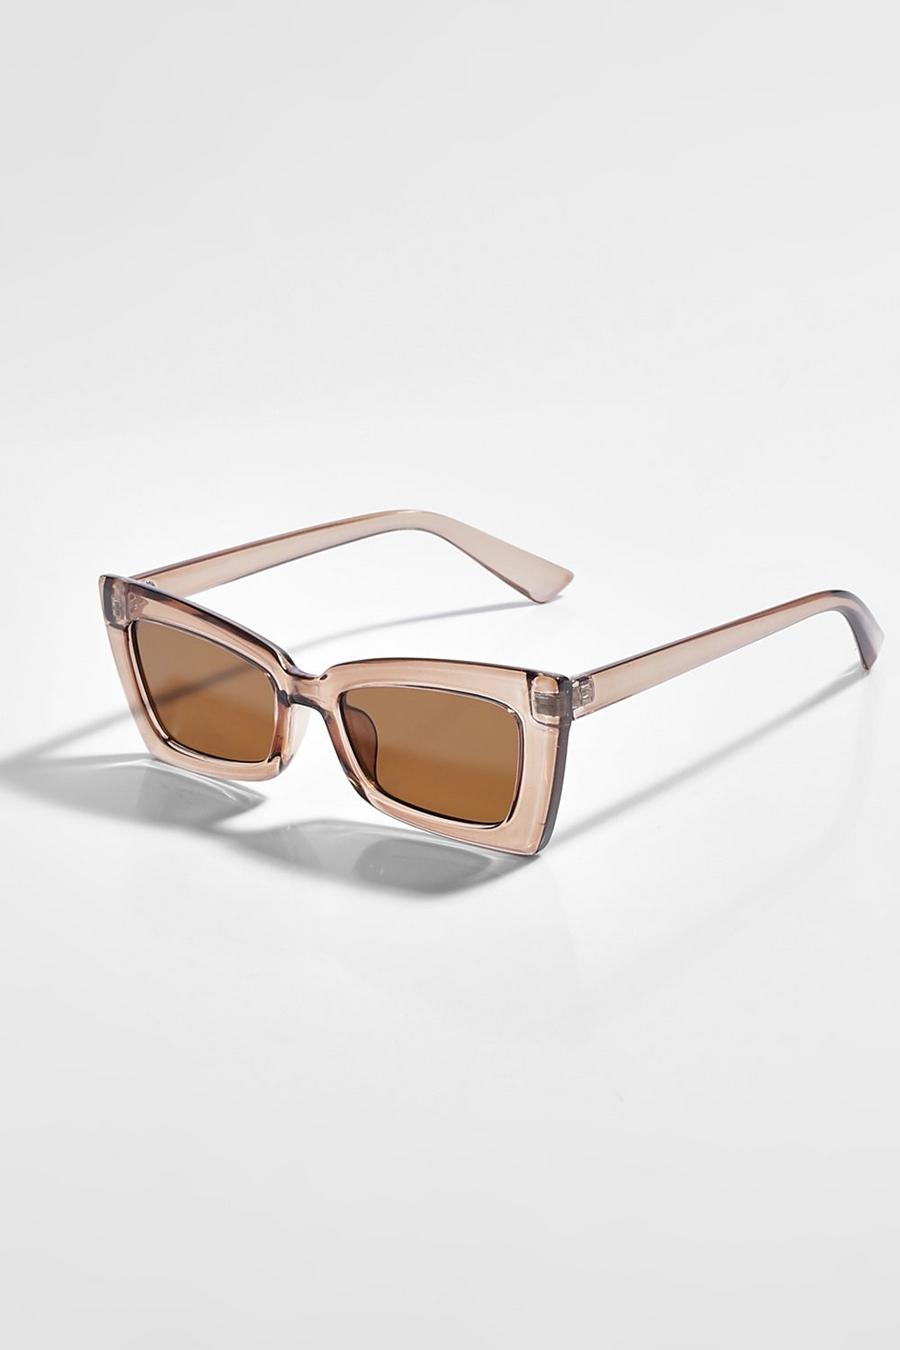 Chocolate brown Square Cat Eye Sunglasses